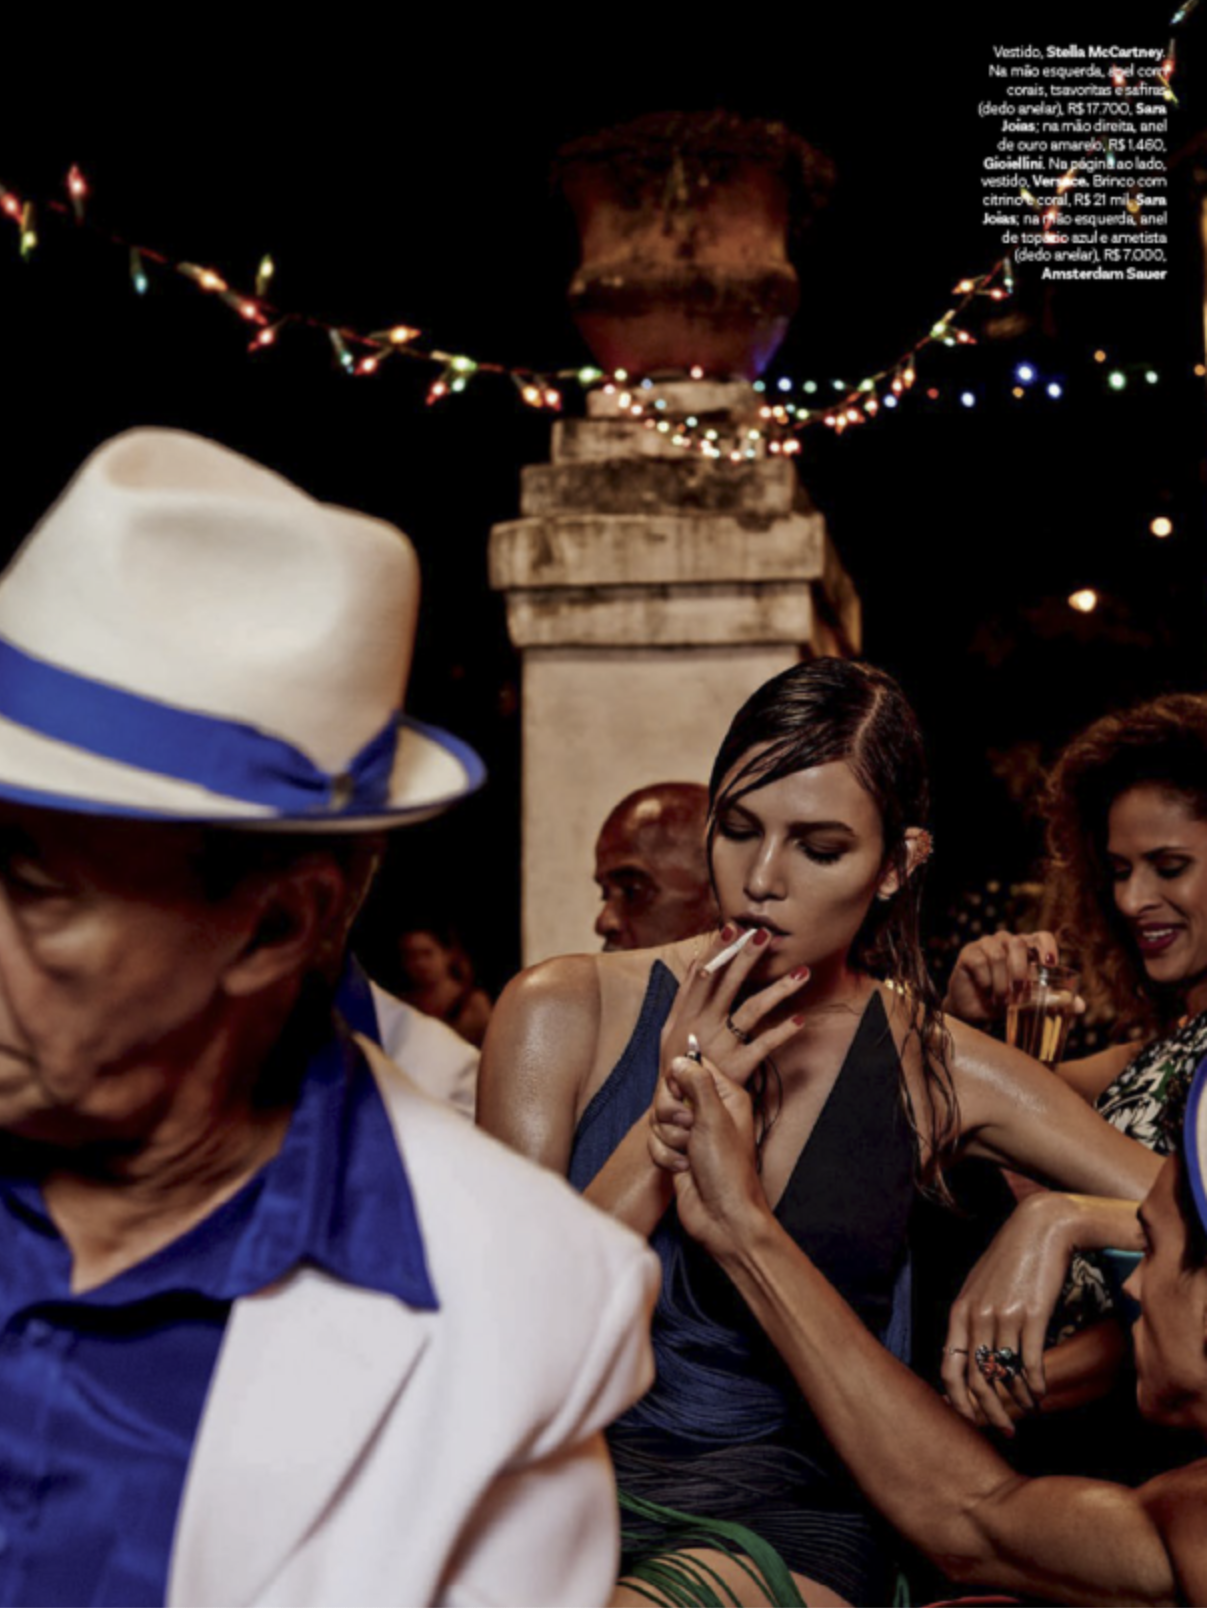 Amanda-Wellsh-Aline Weber in 'Rio Boêmio' By Giampaolo-Sgura-For- Vogue-Brazil-November- 2014-8.png